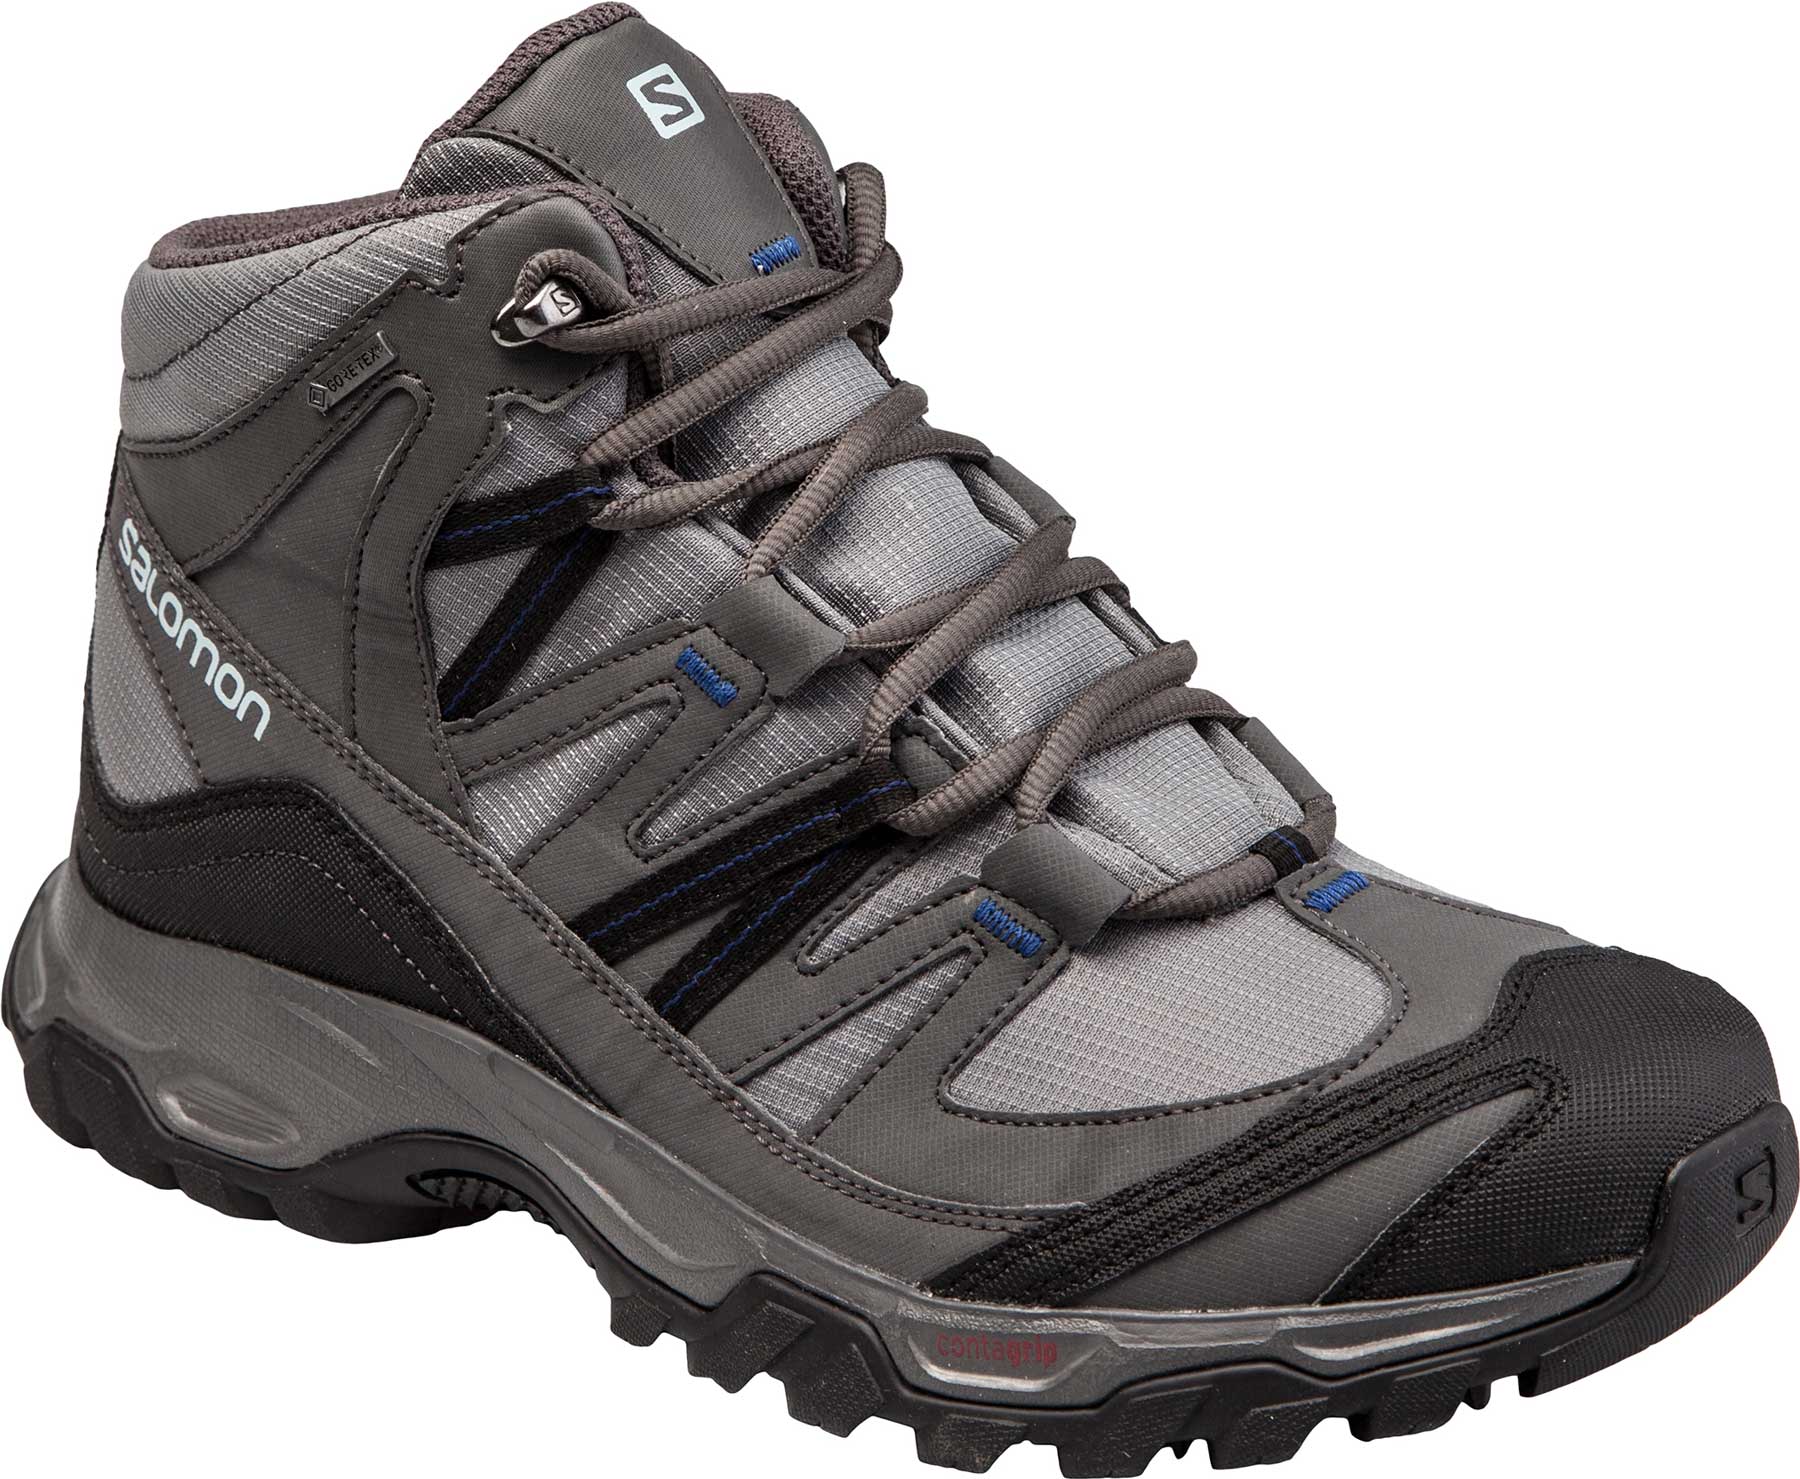 Men’s hiking shoes